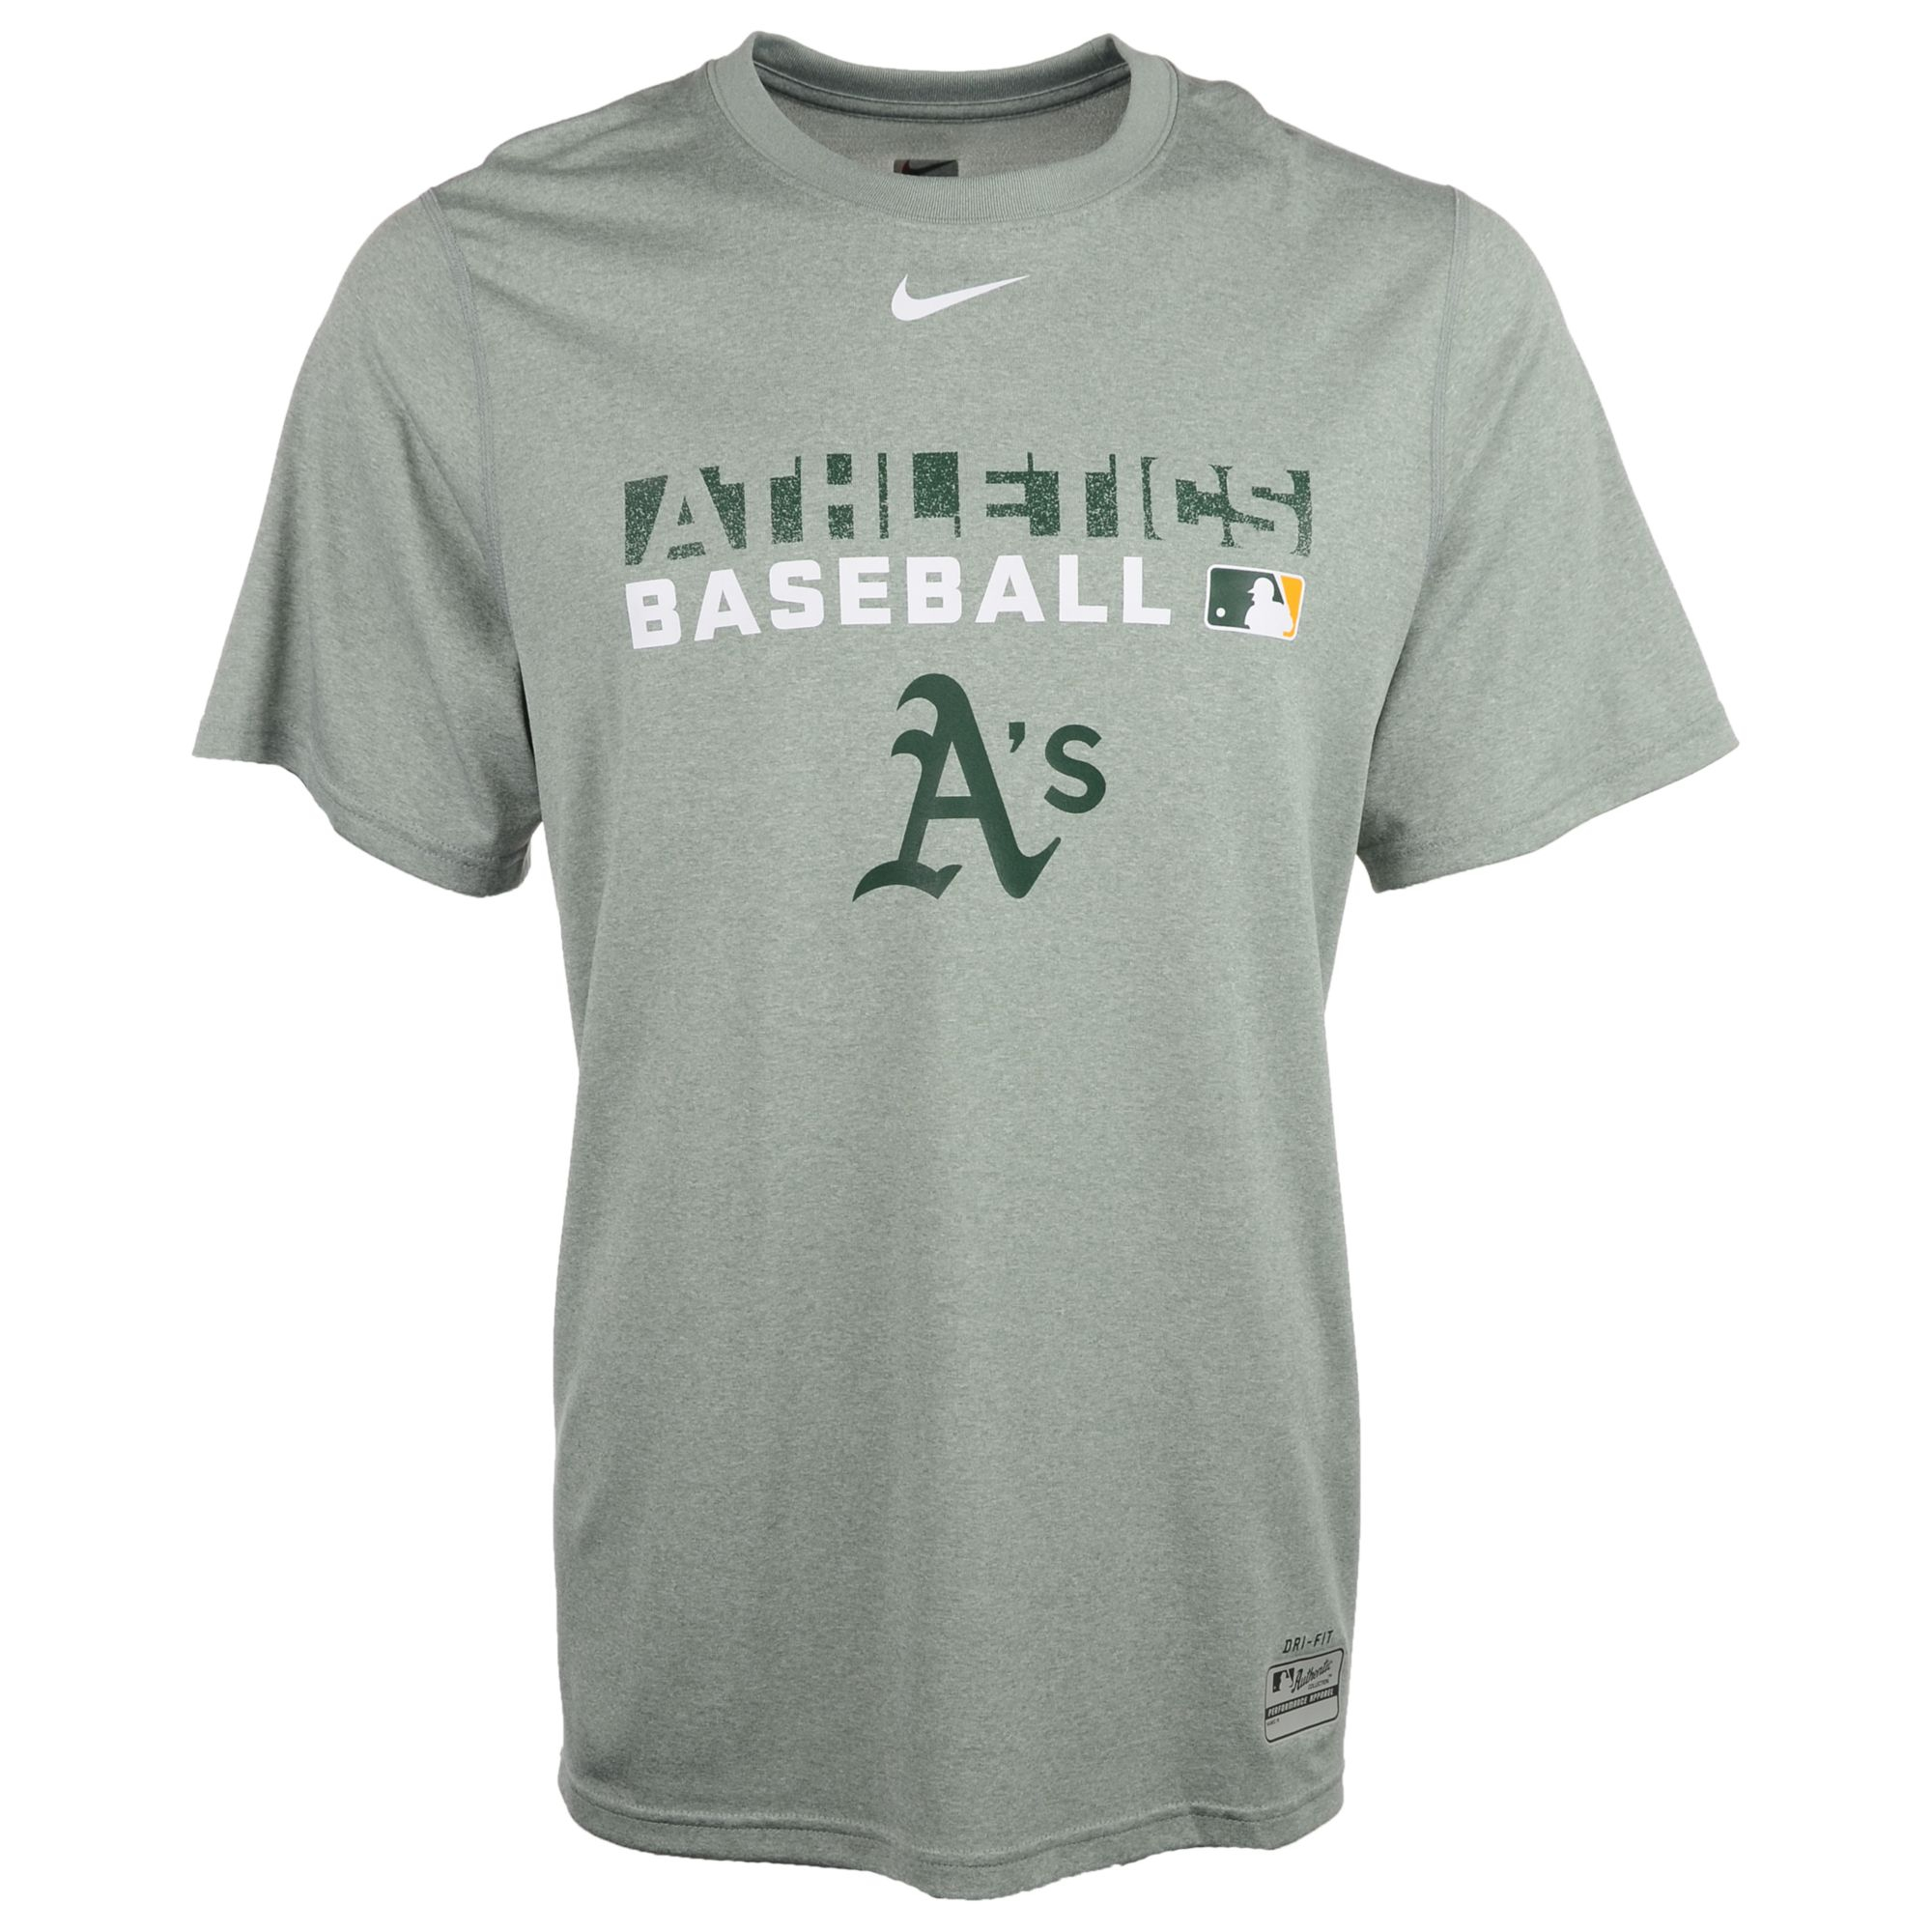 Lyst - Nike Mens Oakland Athletics Drifit Legend Team Issue Tshirt in ...